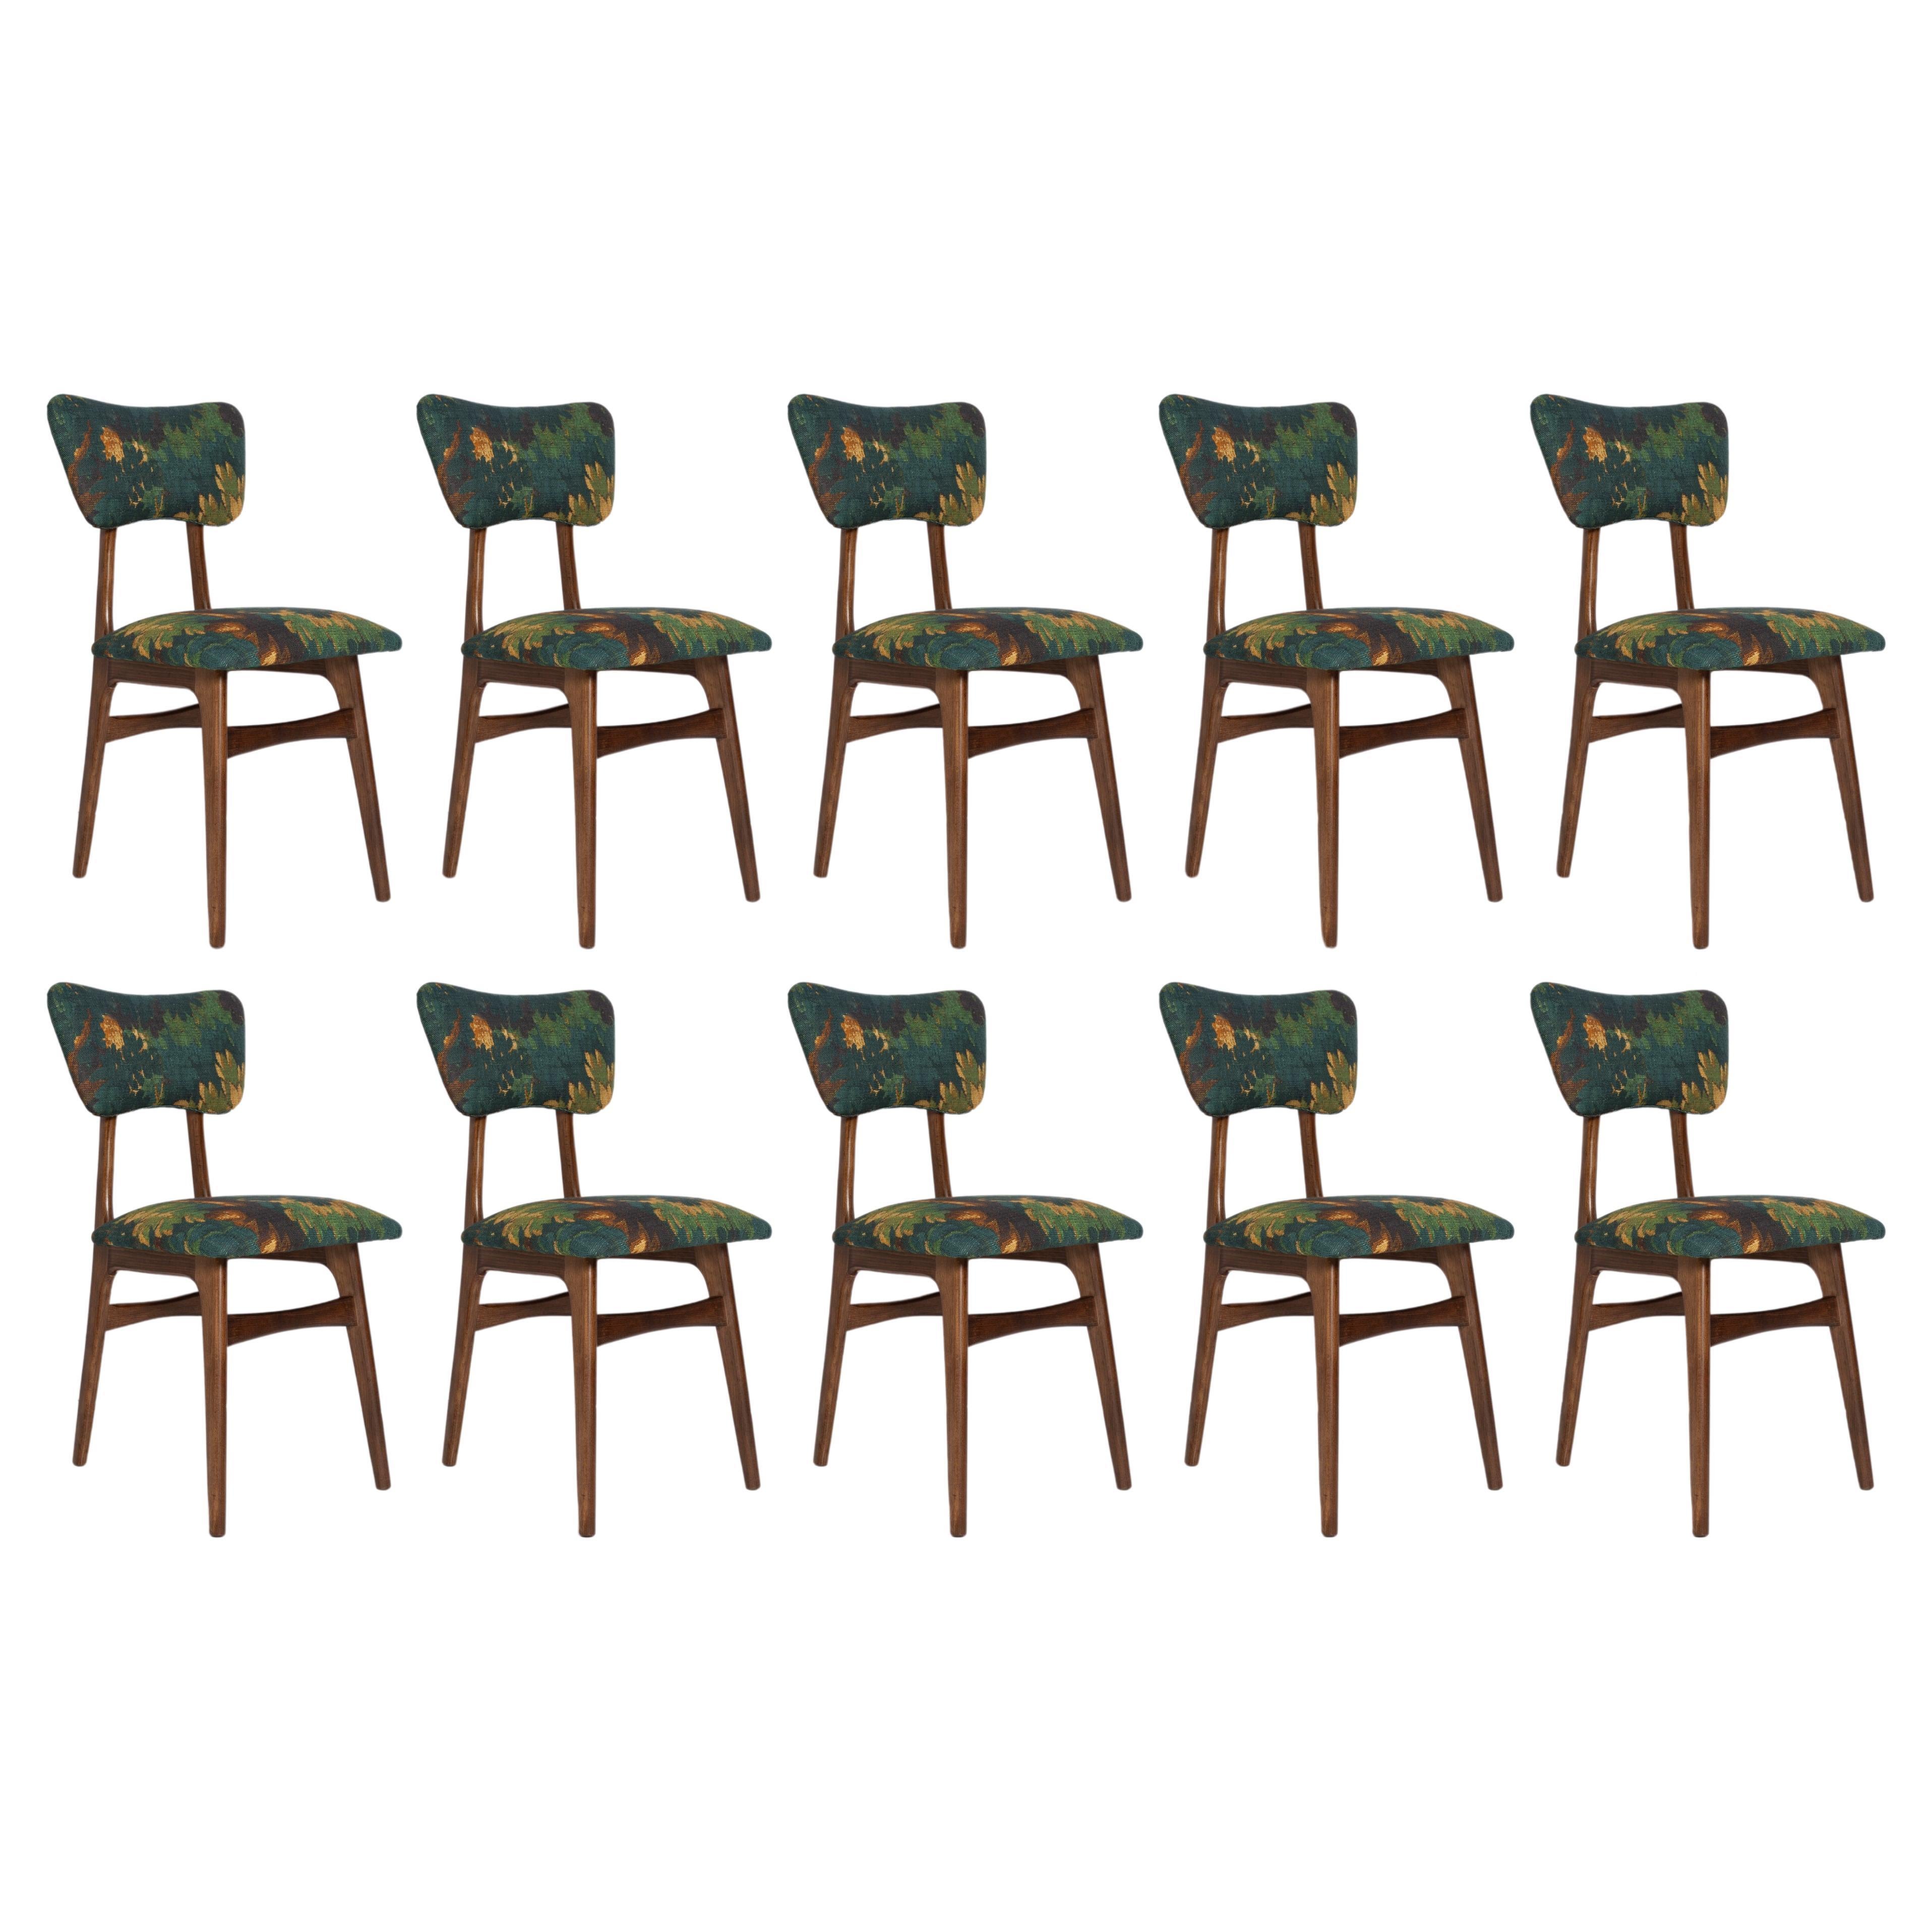 Set of Eight MidCentury Butterfly Chairs, Linen Schwarzwald Dedar, Europe, 1960s